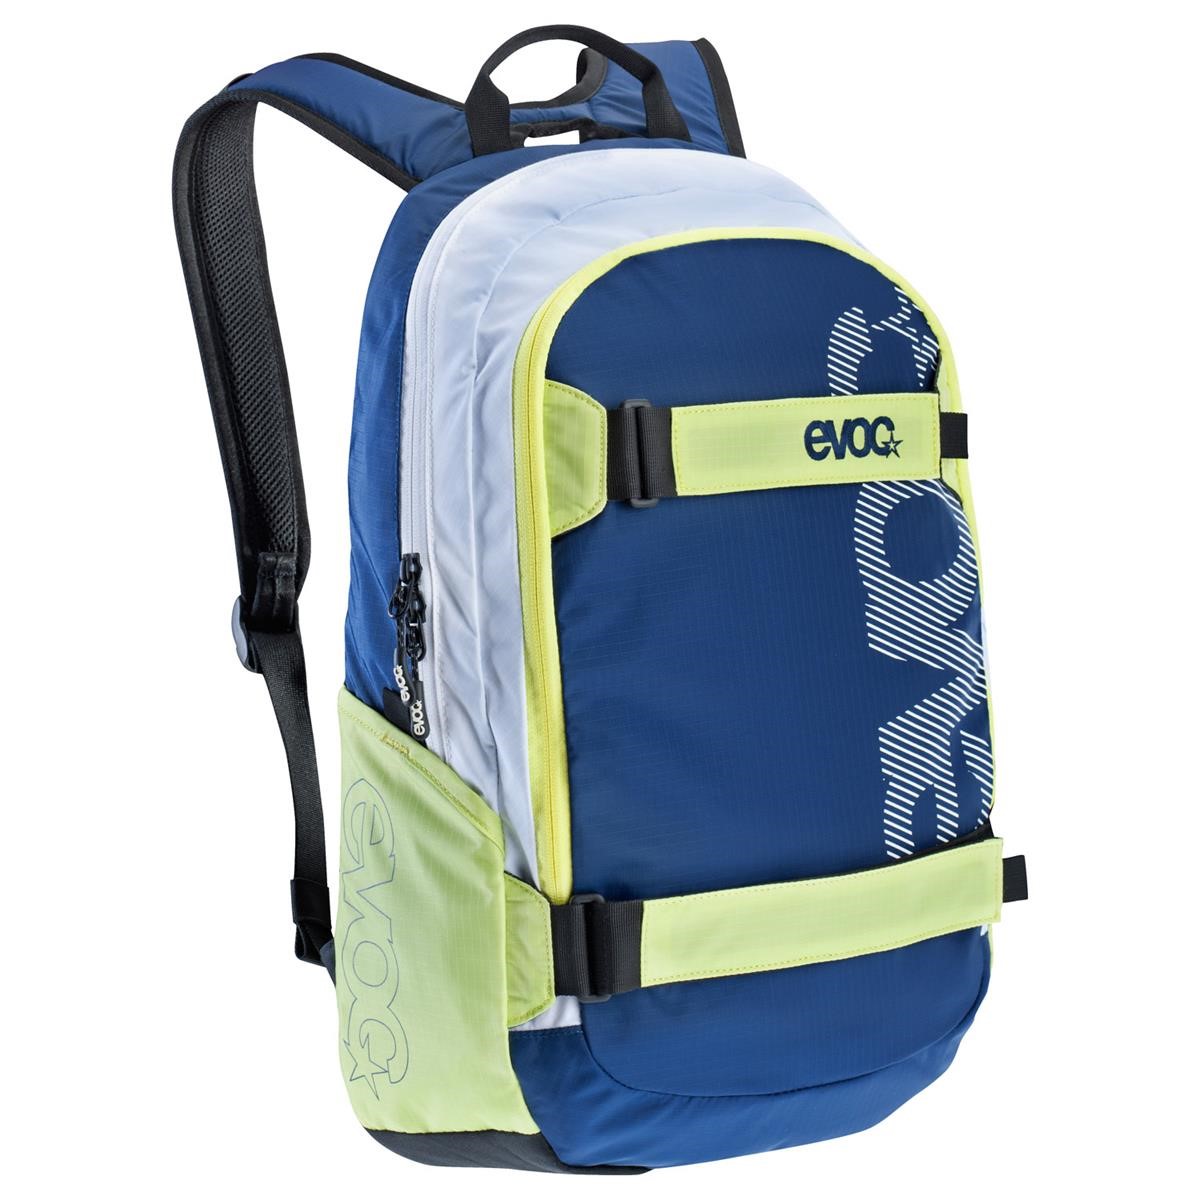 Evoc Backpack Street Navy/Lime, 20 Liter